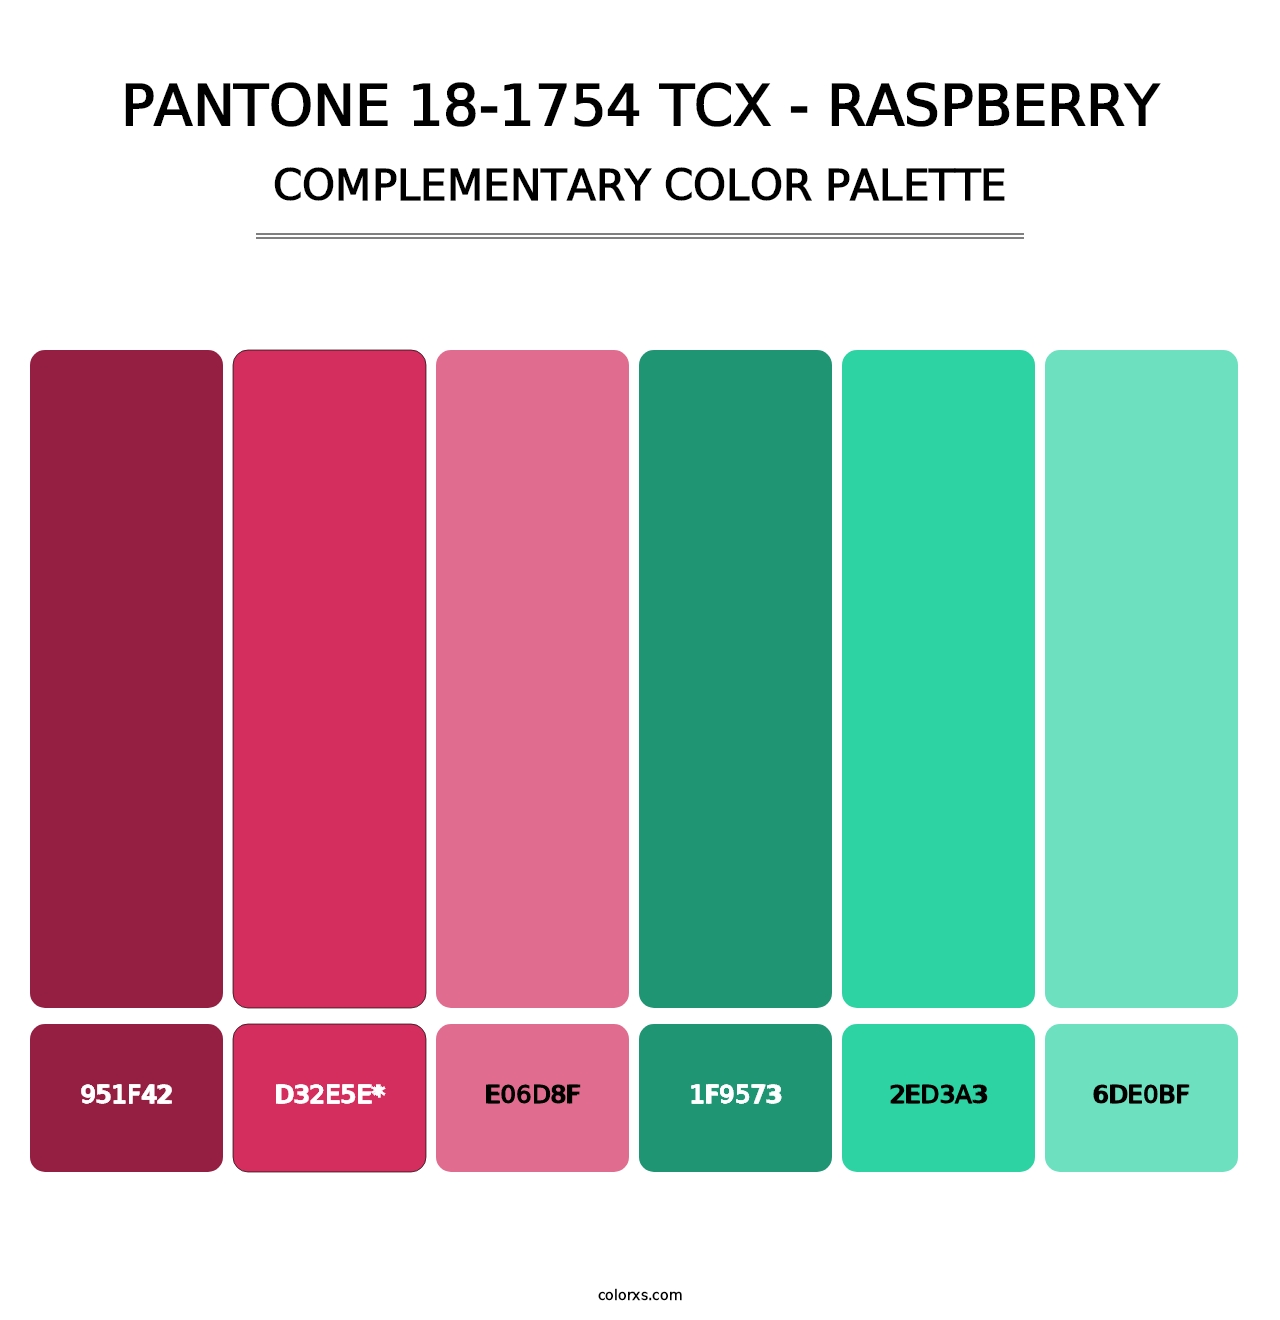 PANTONE 18-1754 TCX - Raspberry - Complementary Color Palette